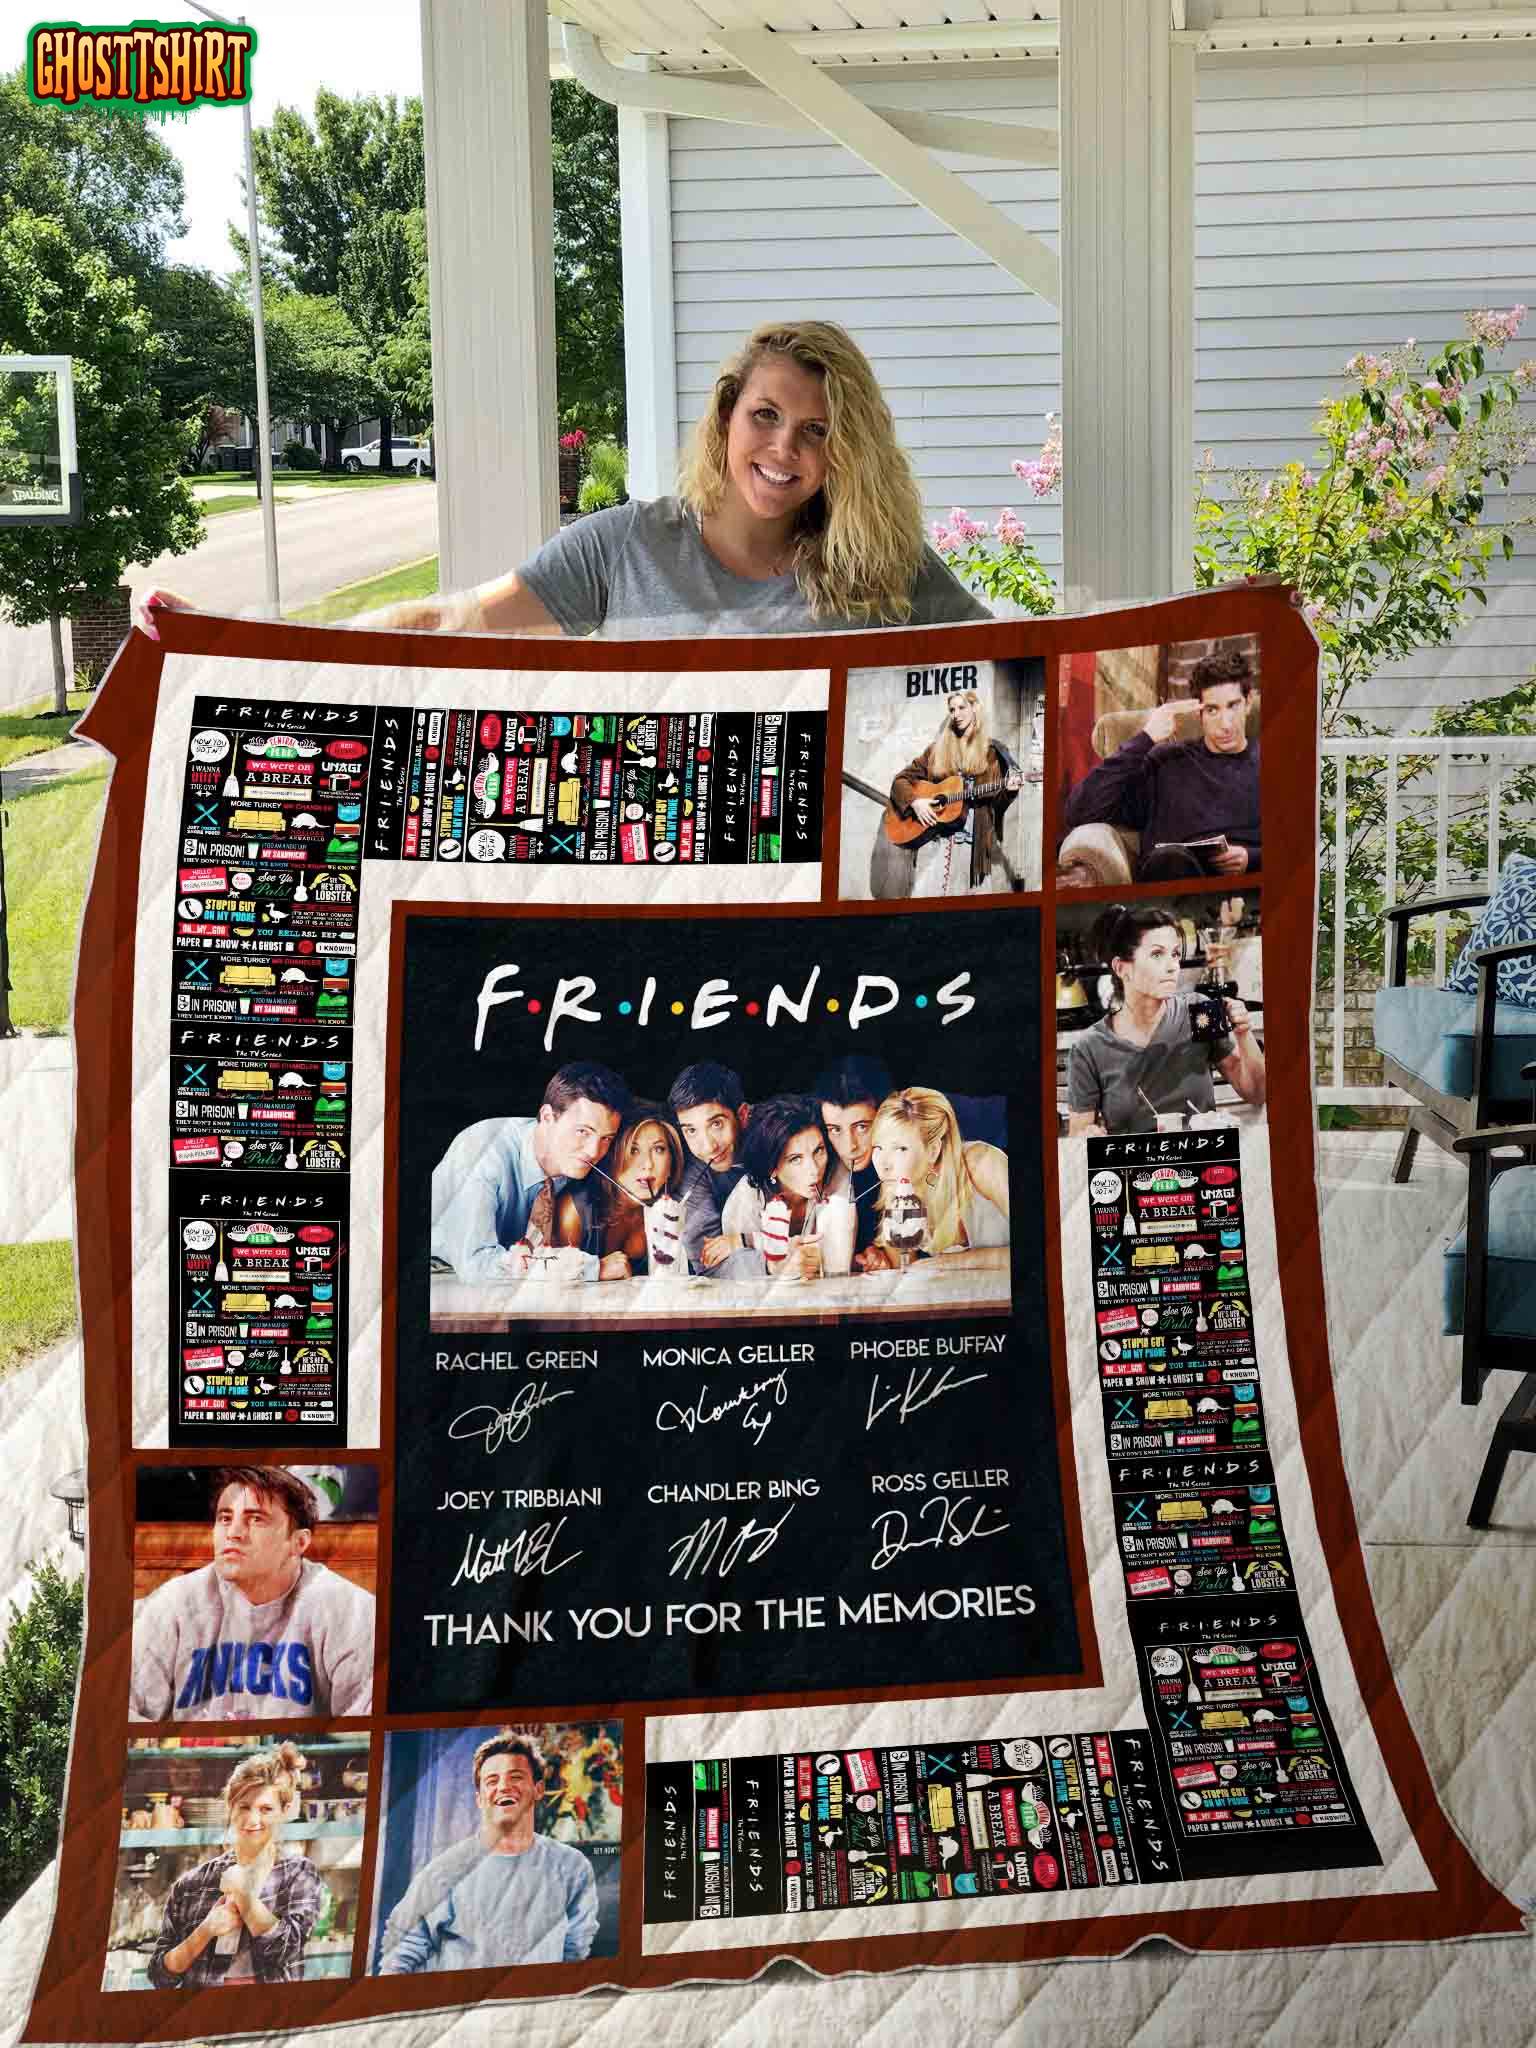 Friends (Tv Show) Quilt Blanket